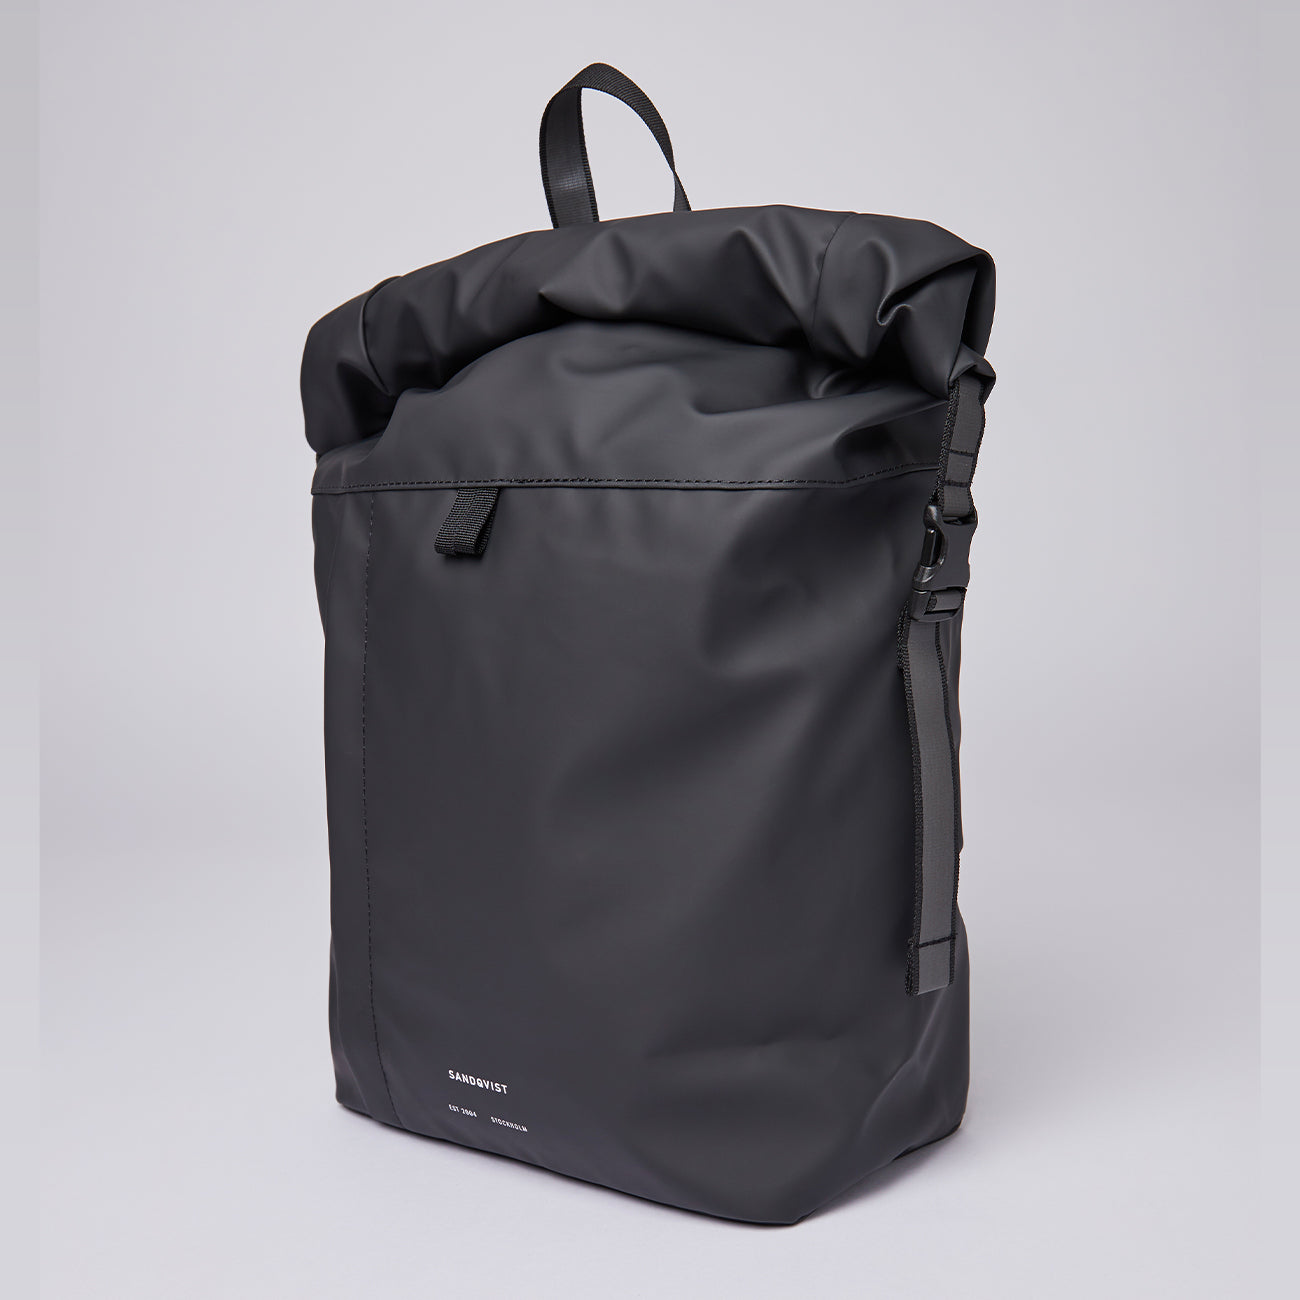 sac à dos roll top waterproof noir vue laterale